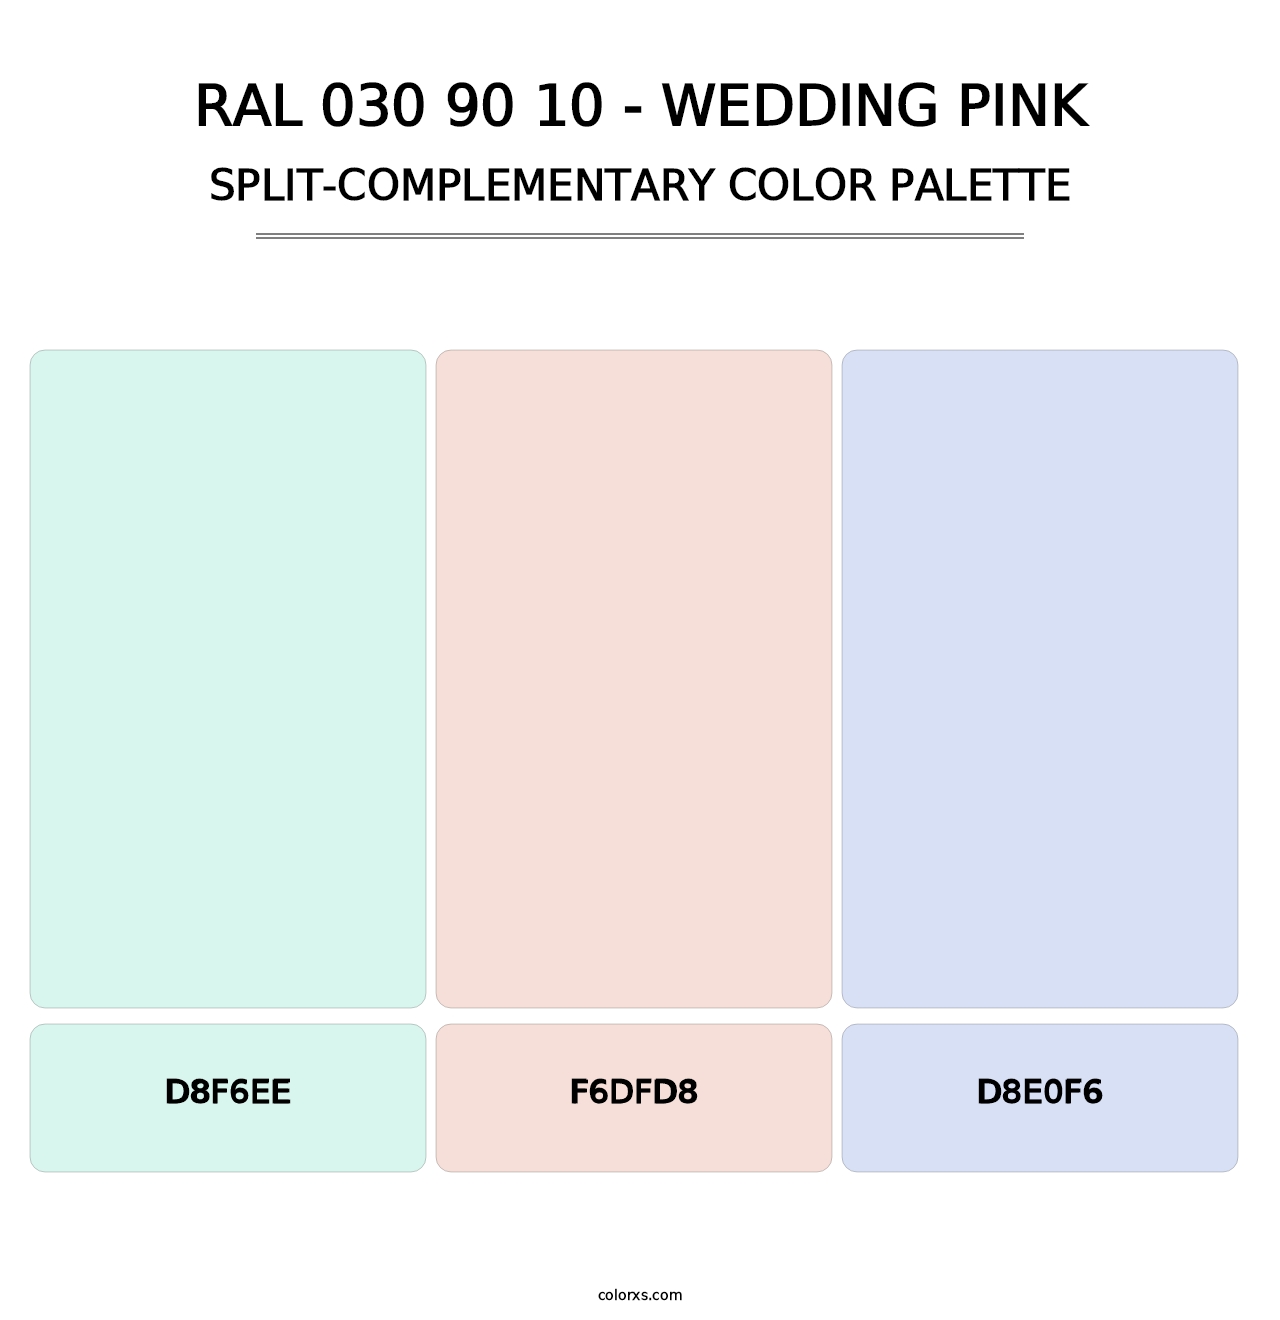 RAL 030 90 10 - Wedding Pink - Split-Complementary Color Palette